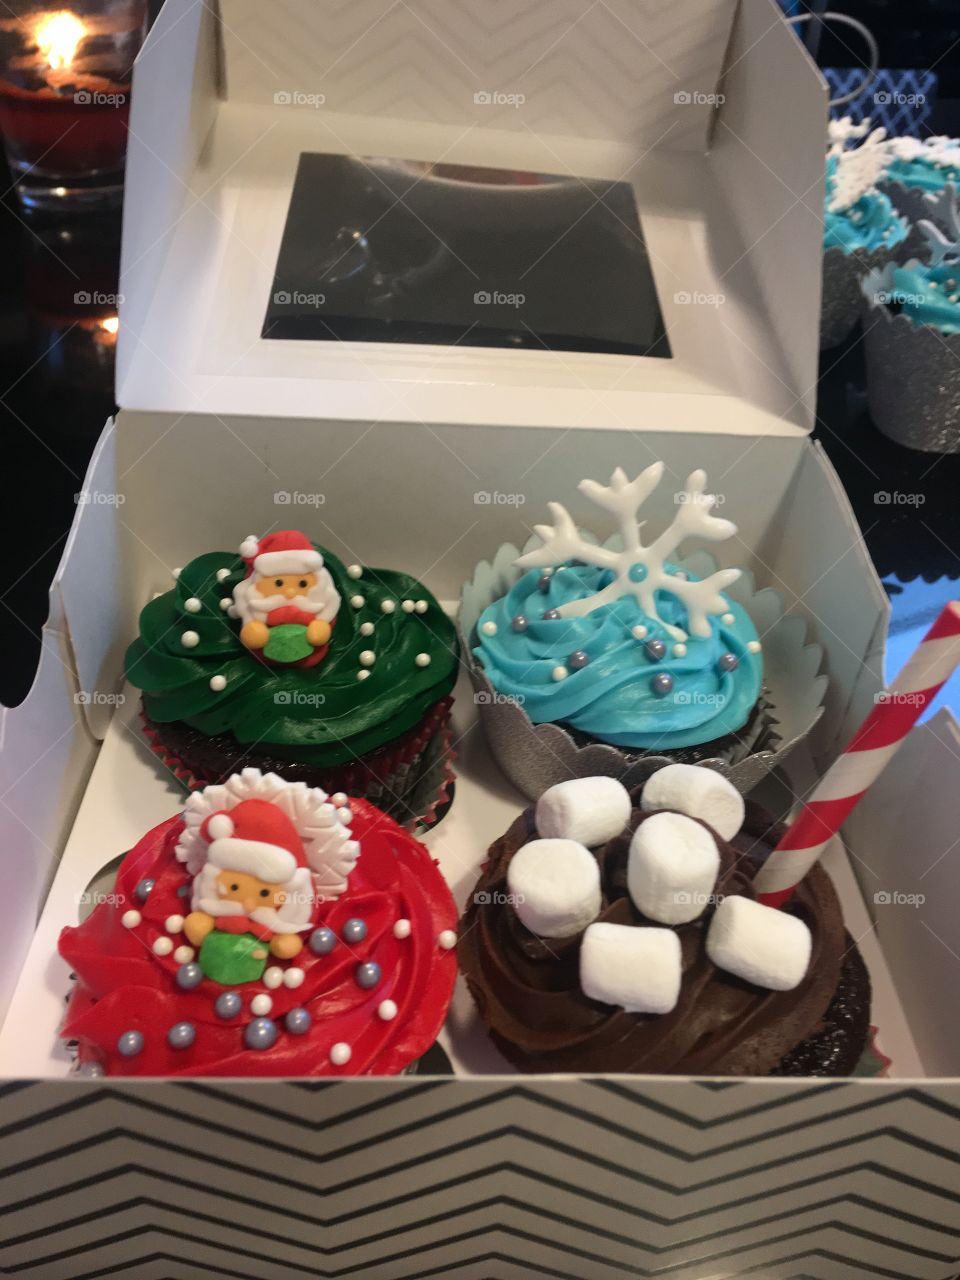 Incredible cupcakes 